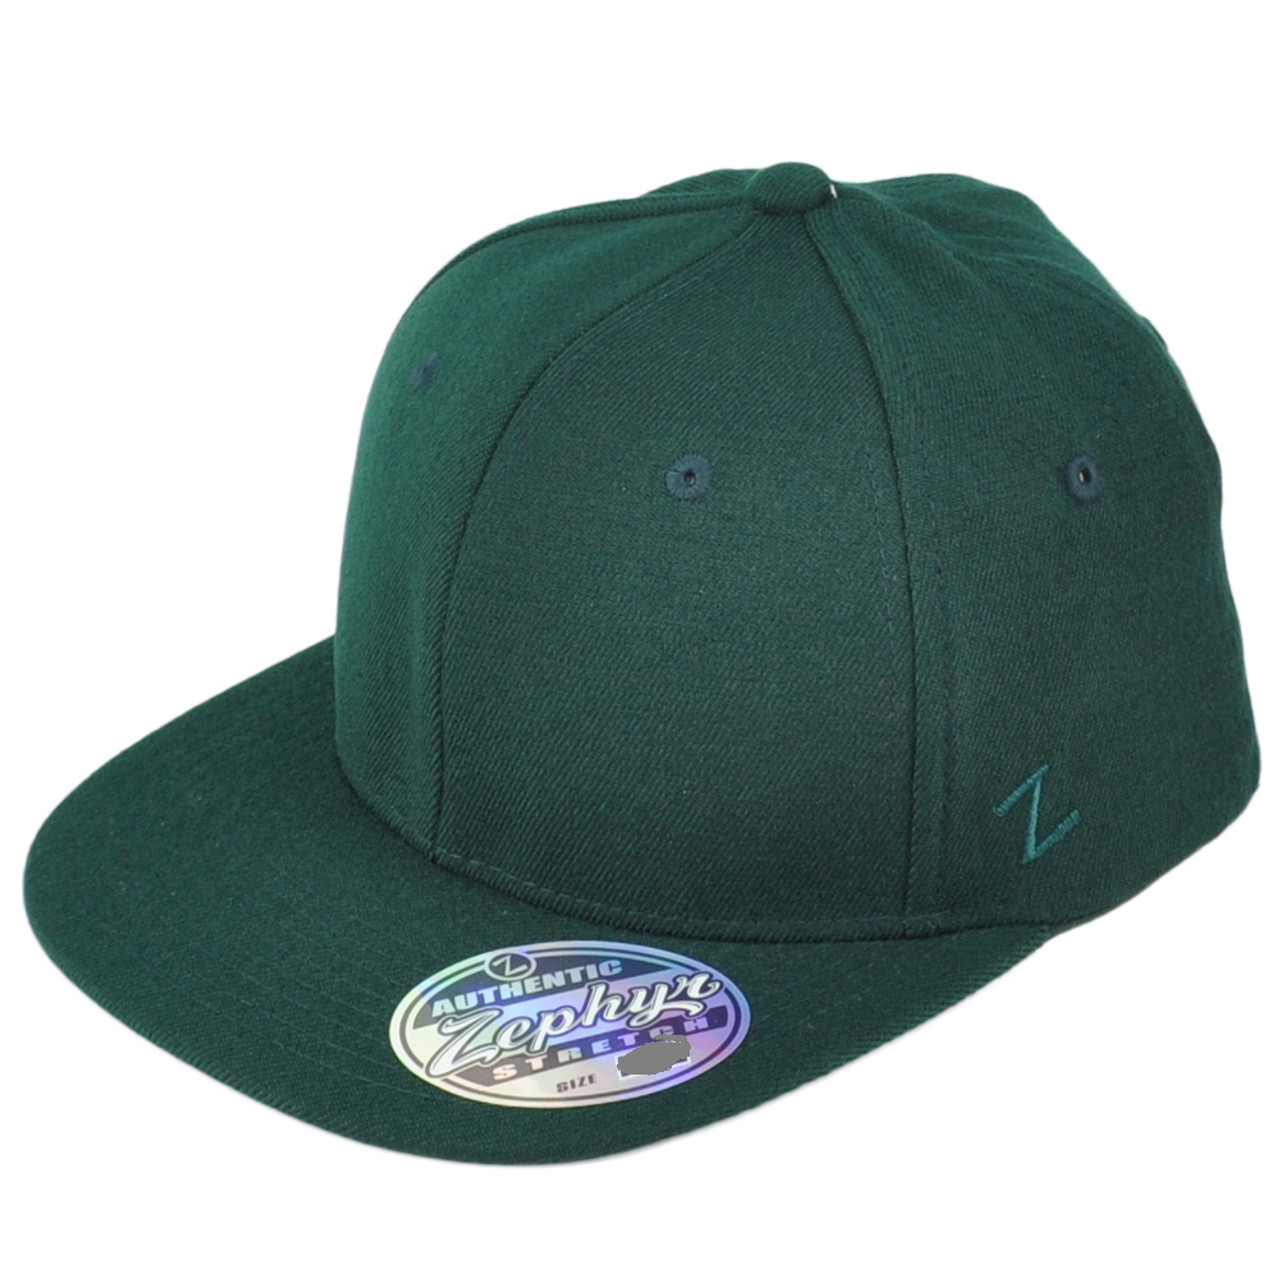 Zephyr Dark Forest Stretch - Cap Fit Flex Store Green Hat Medium/Large Cap Flat Blank Bill